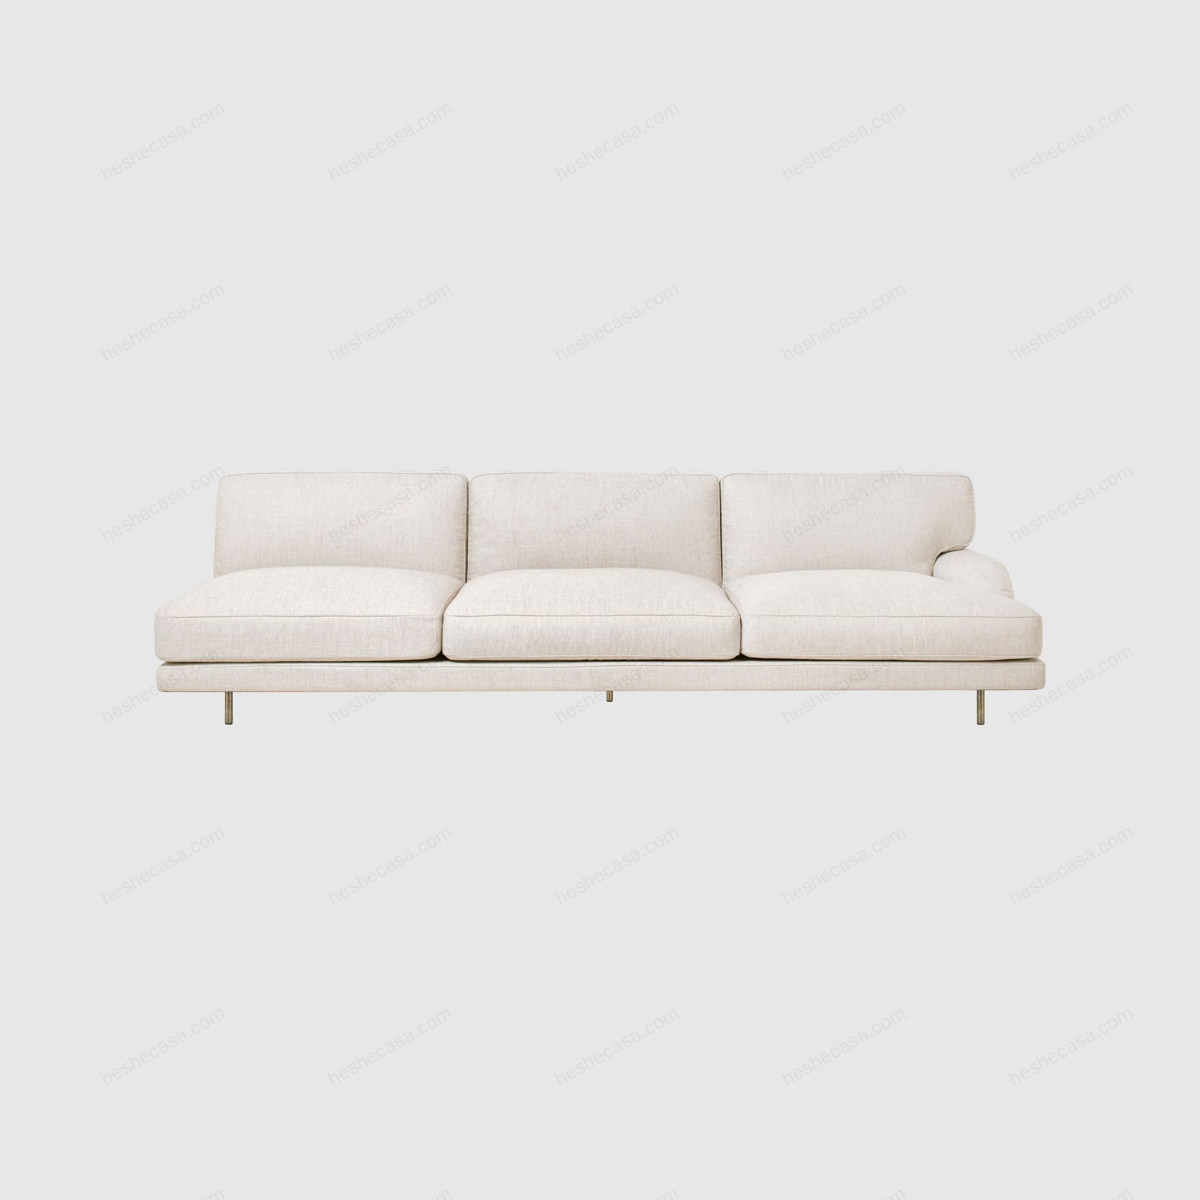 Flaneur Sofa - 3 Seater沙发